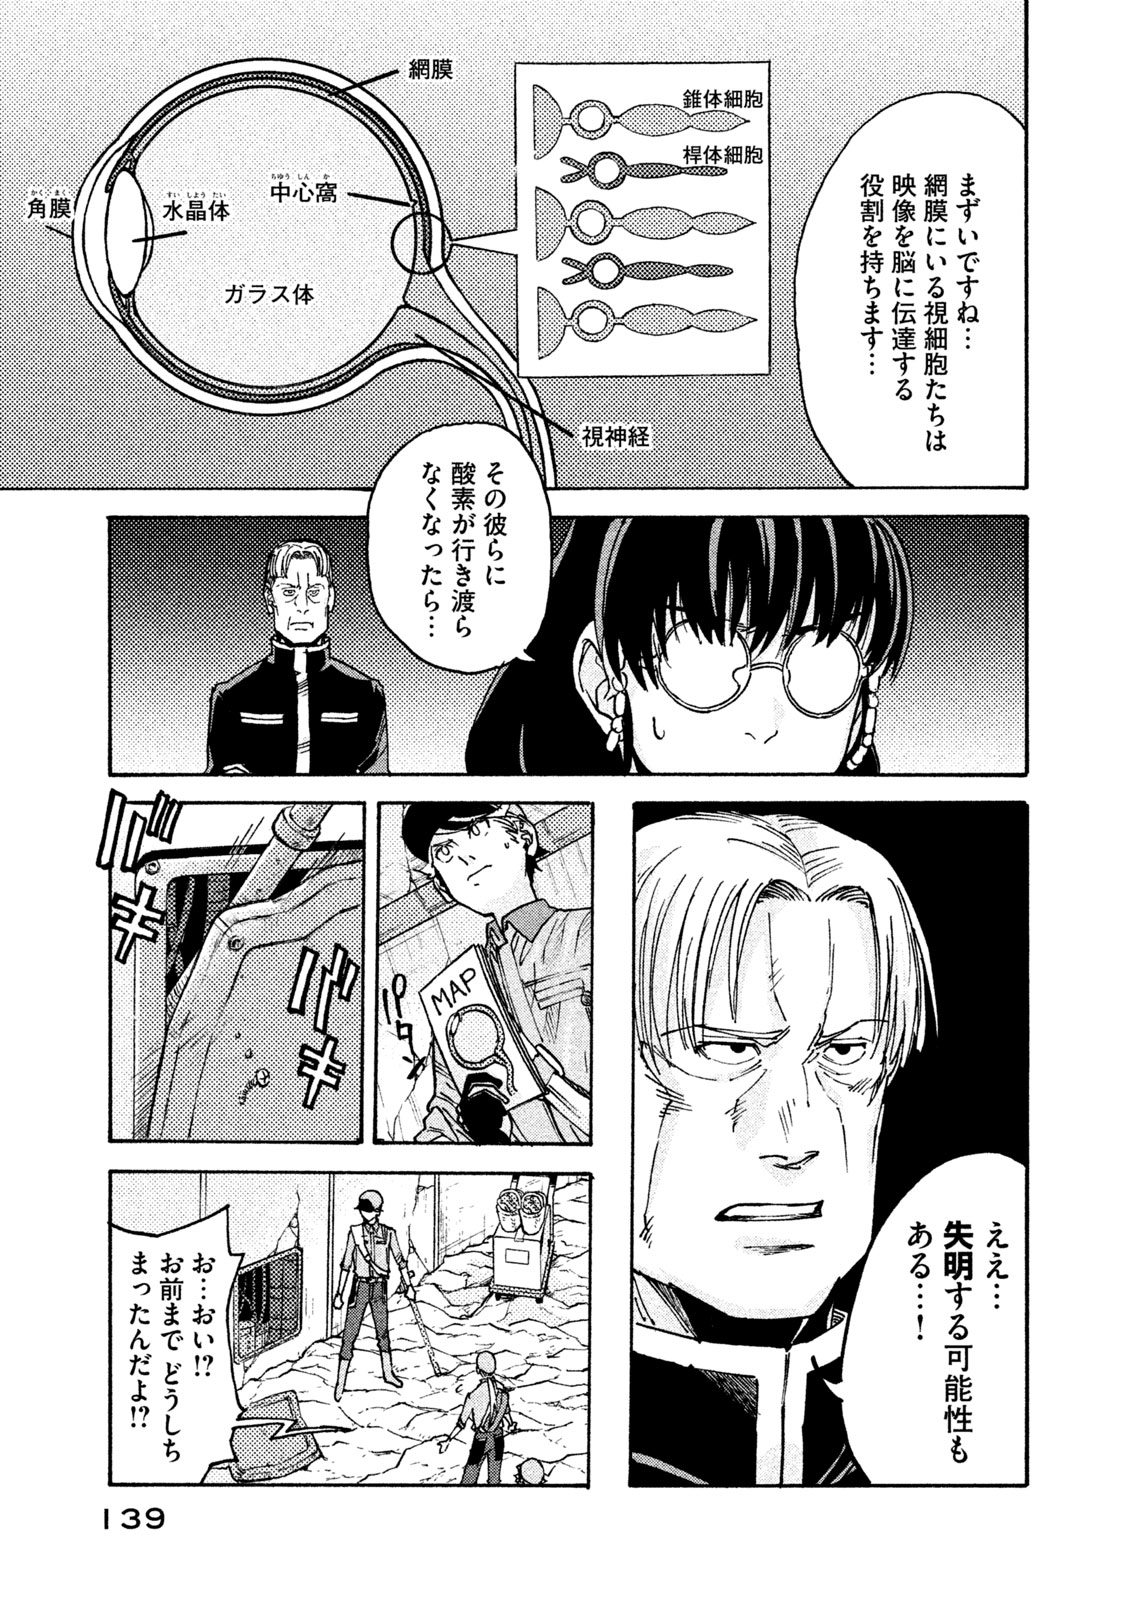 Hataraku Saibou BLACK - Chapter 24 - Page 13